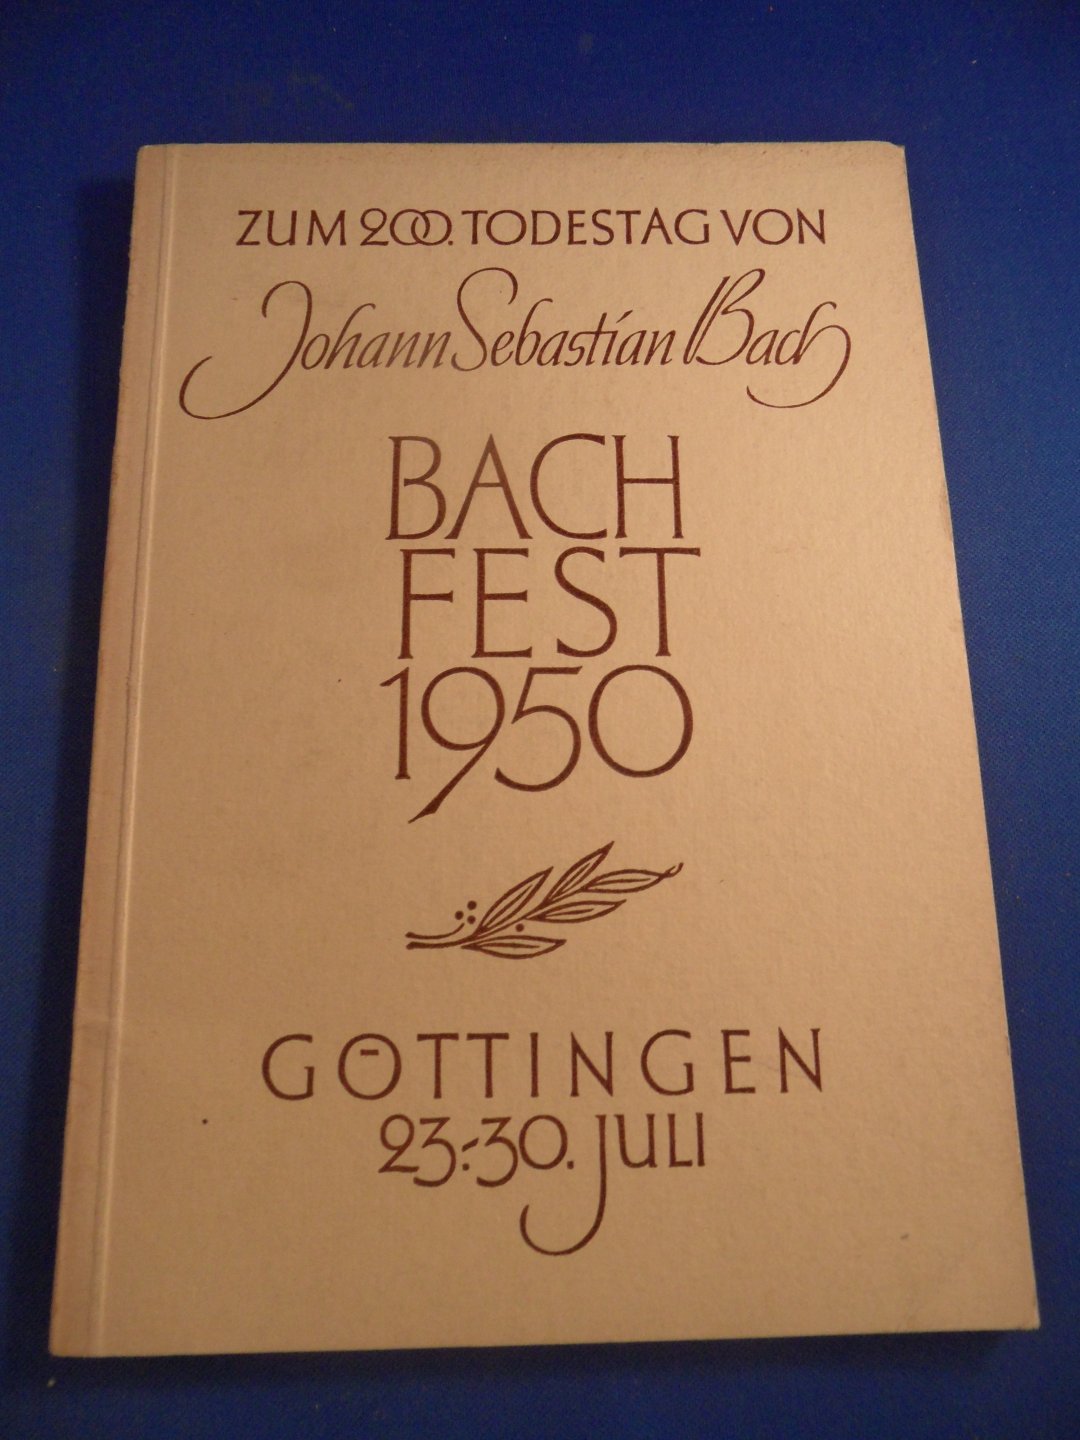 Gerber, Rudolf - program, zum 200. Todestag van J.S. Bach, Bachfest 1950